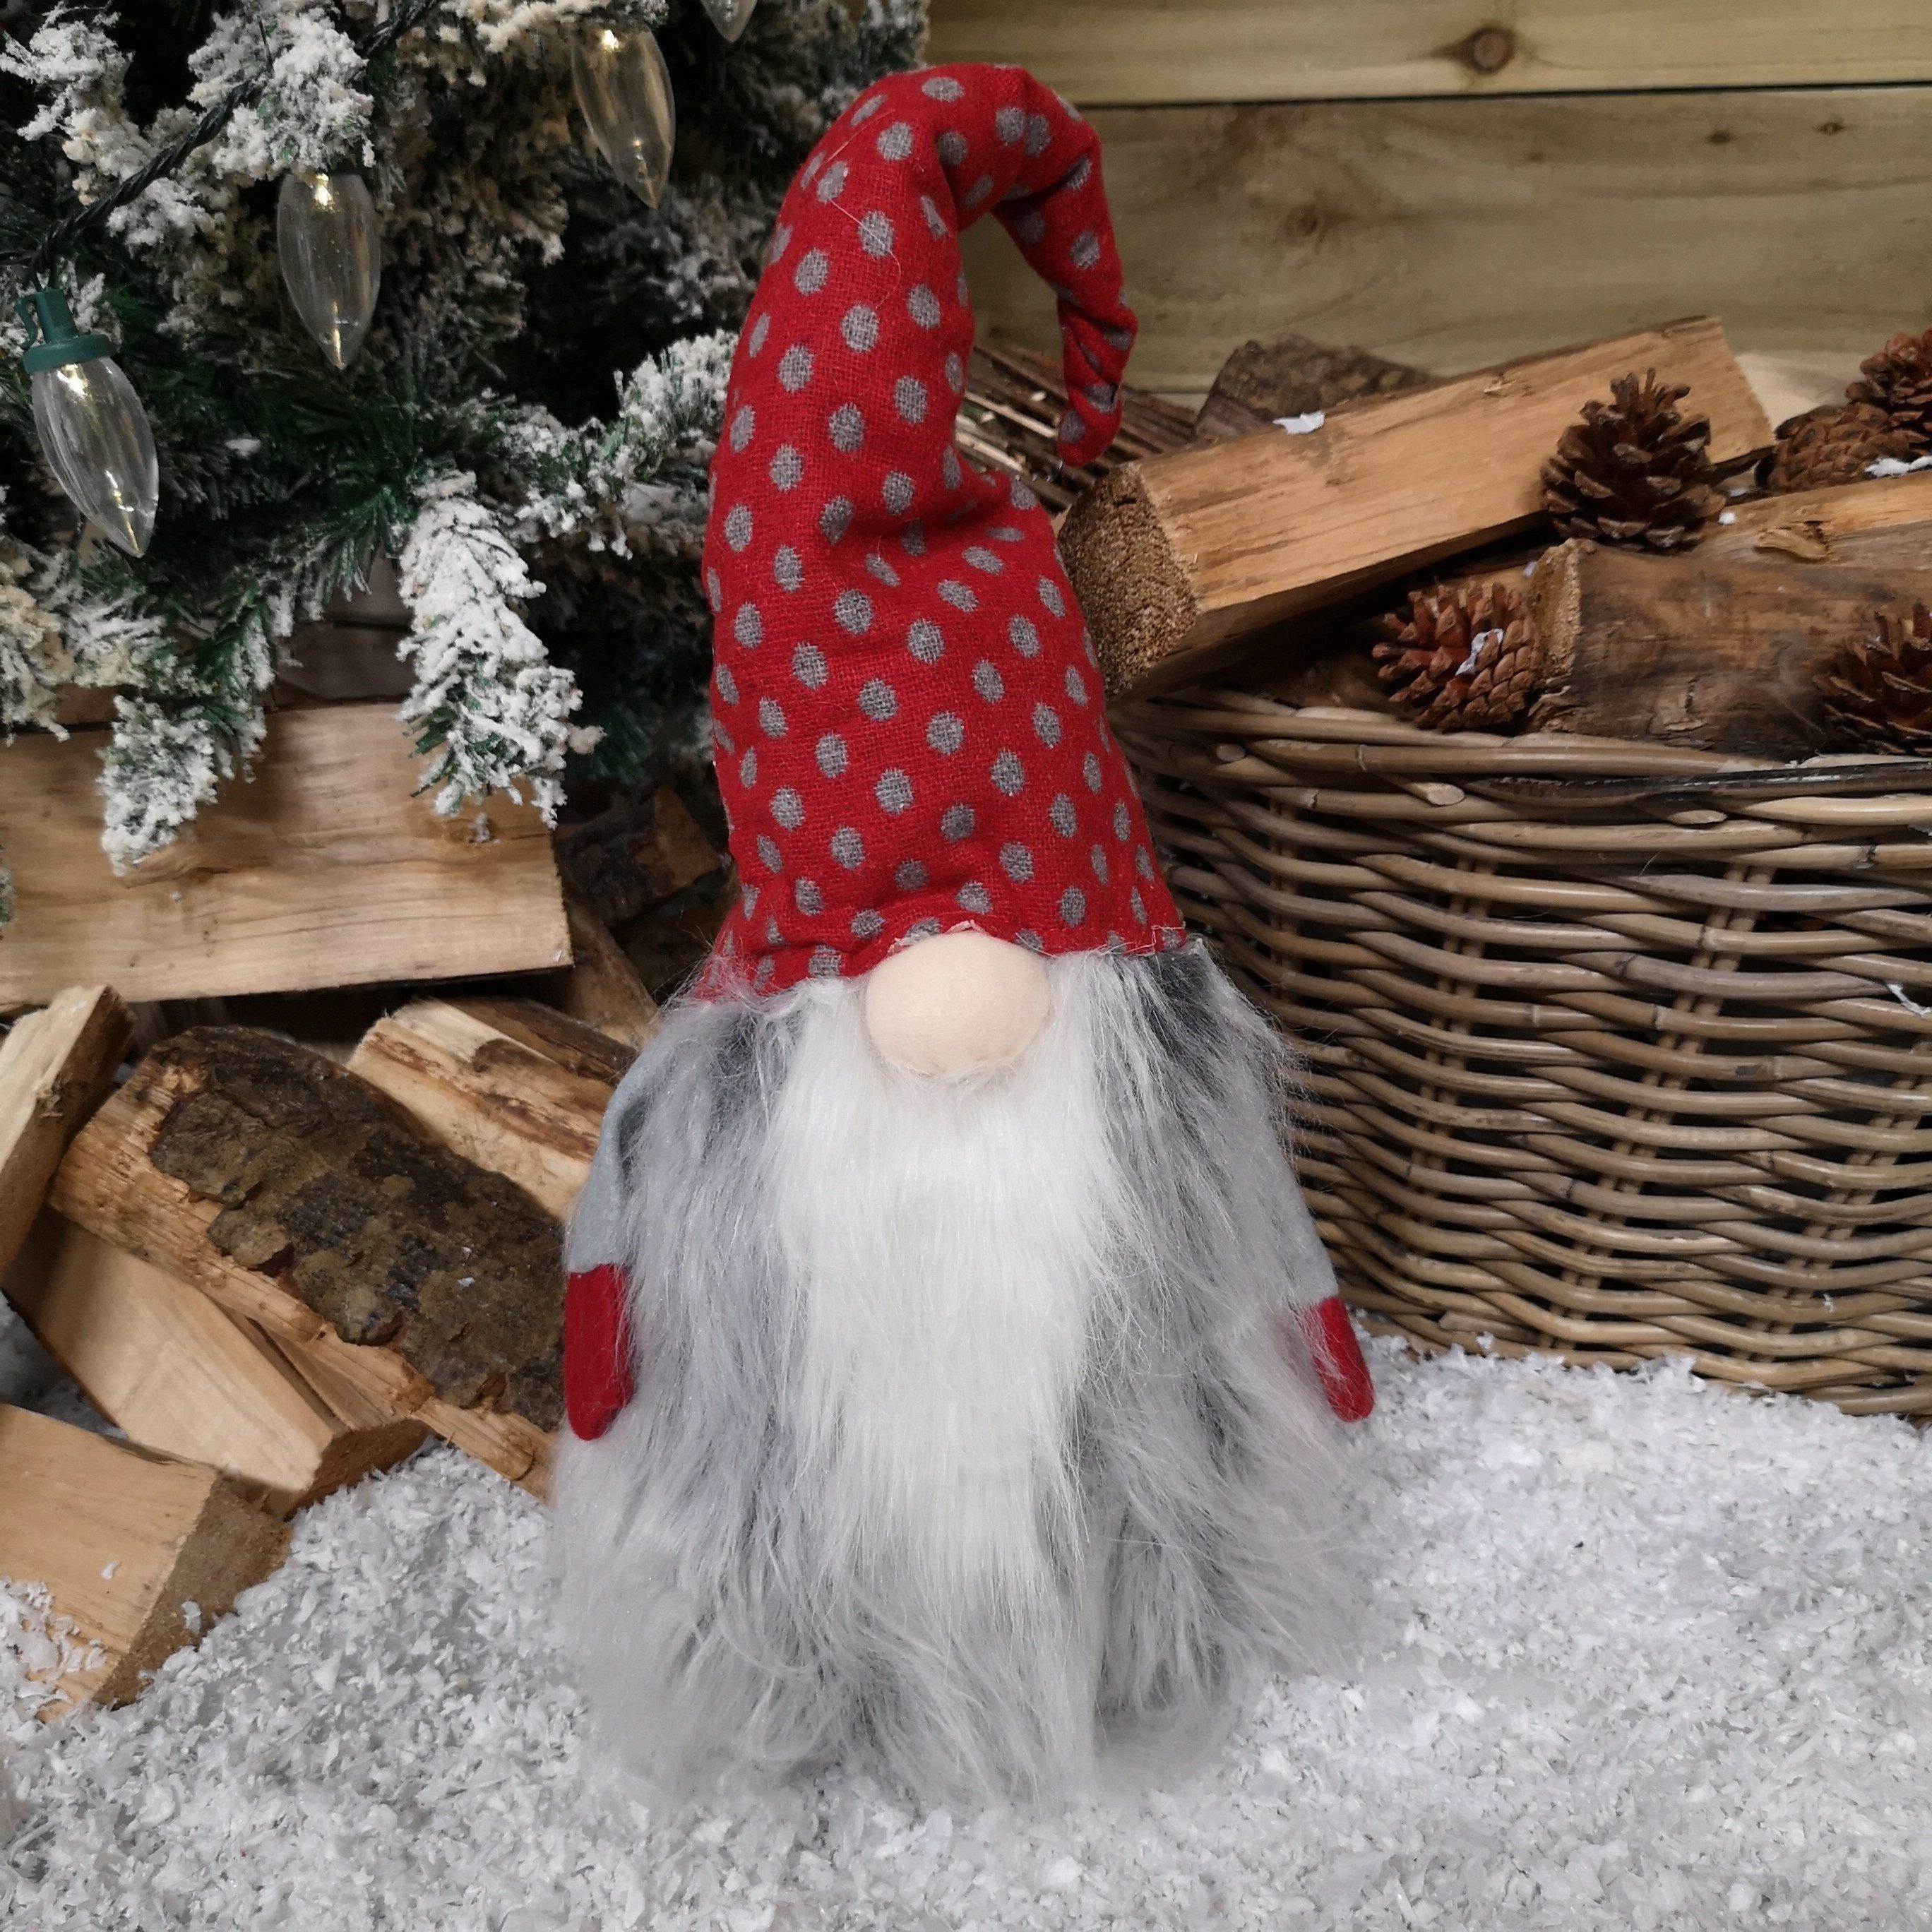 52cm Festive Gonk Cuddly Santa Indoor Christmas Plush Decoration in Polka Dot Hat - image 1